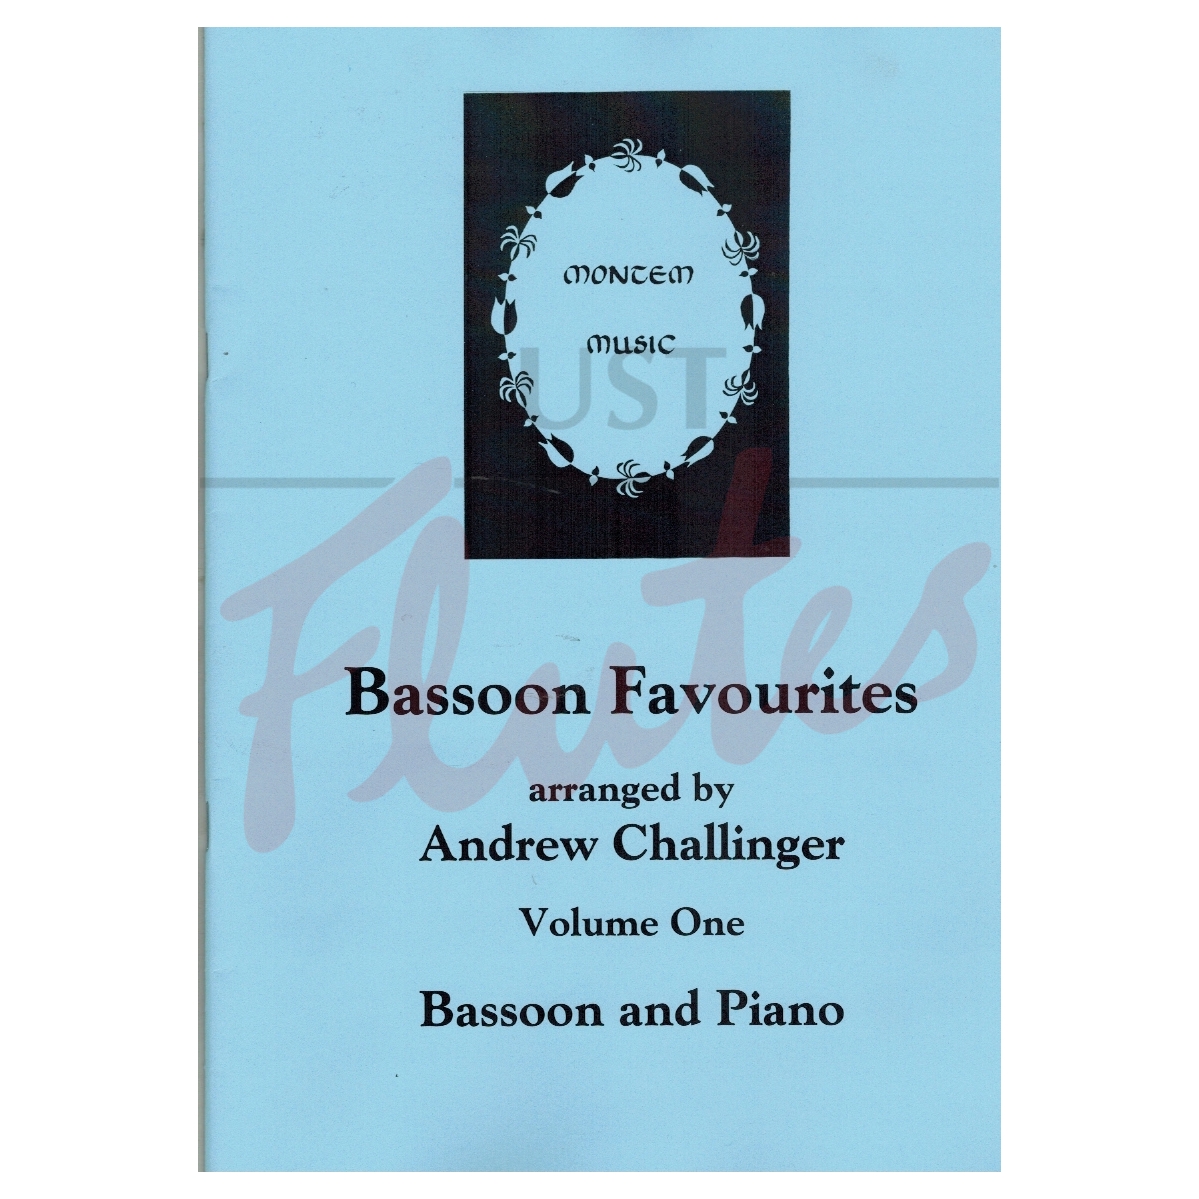 Bassoon Favourites Vol 1